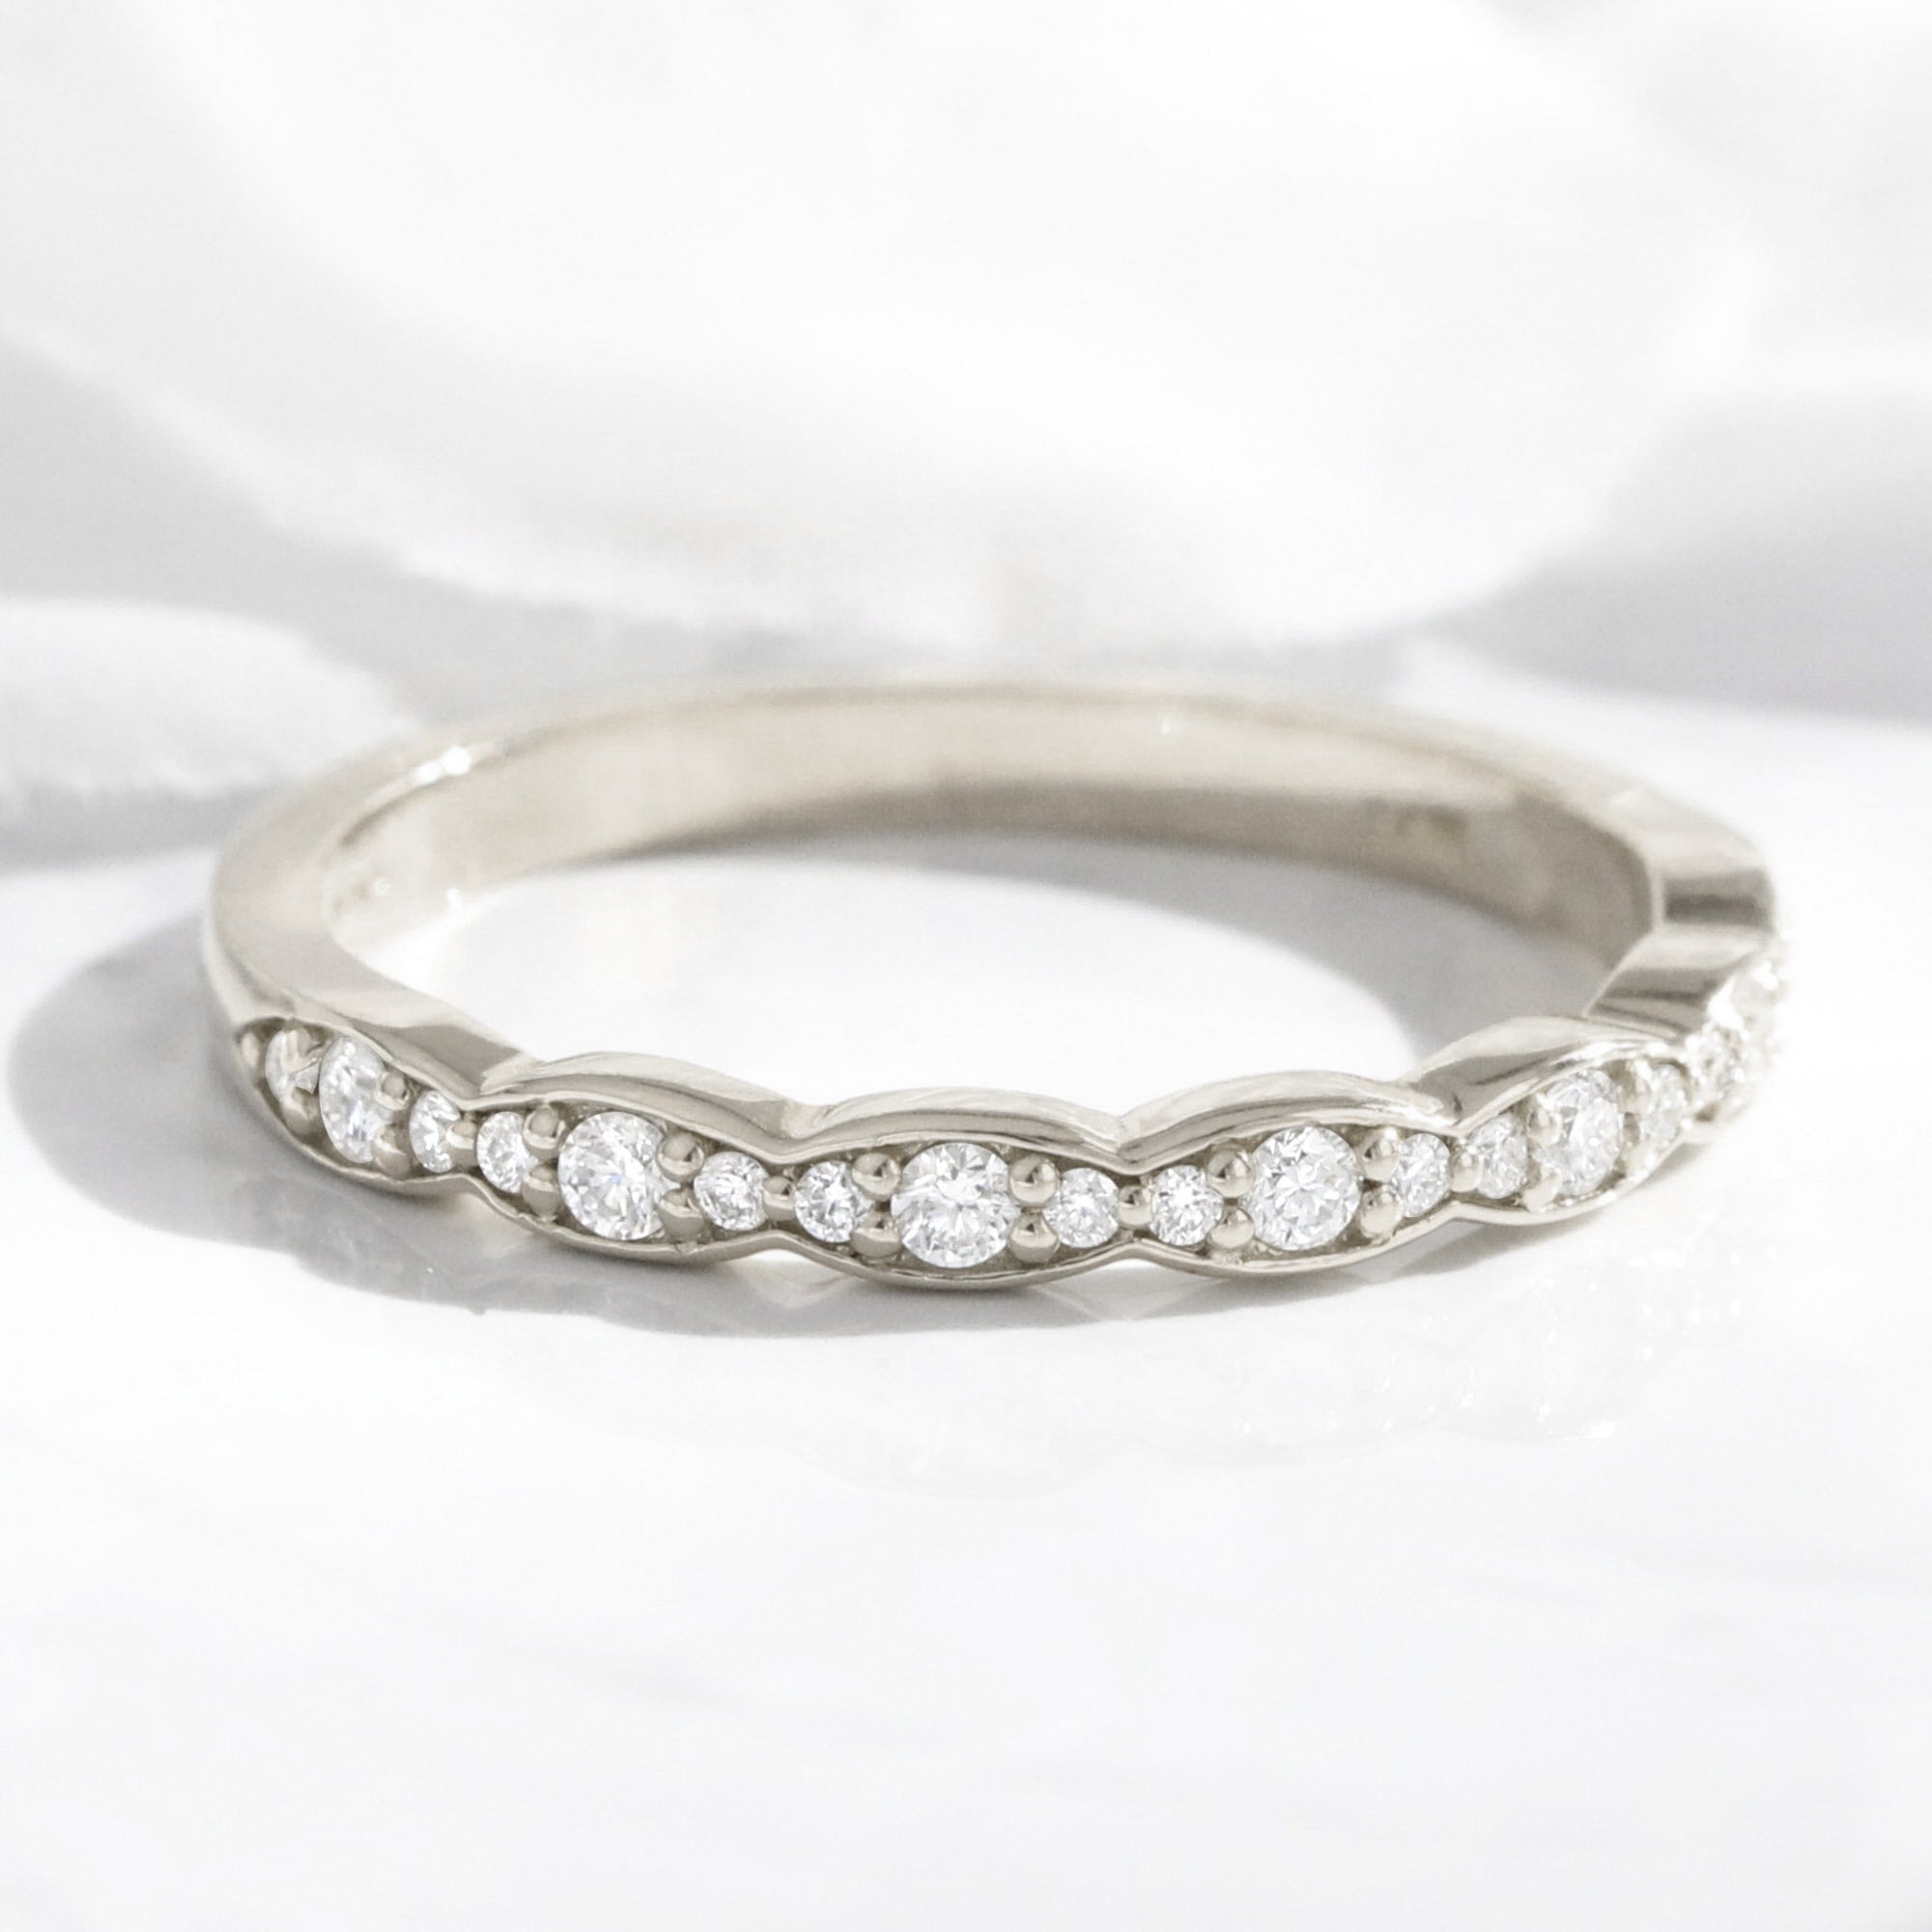 Scalloped diamond wedding ring white gold half eternity band by la more design jewelry